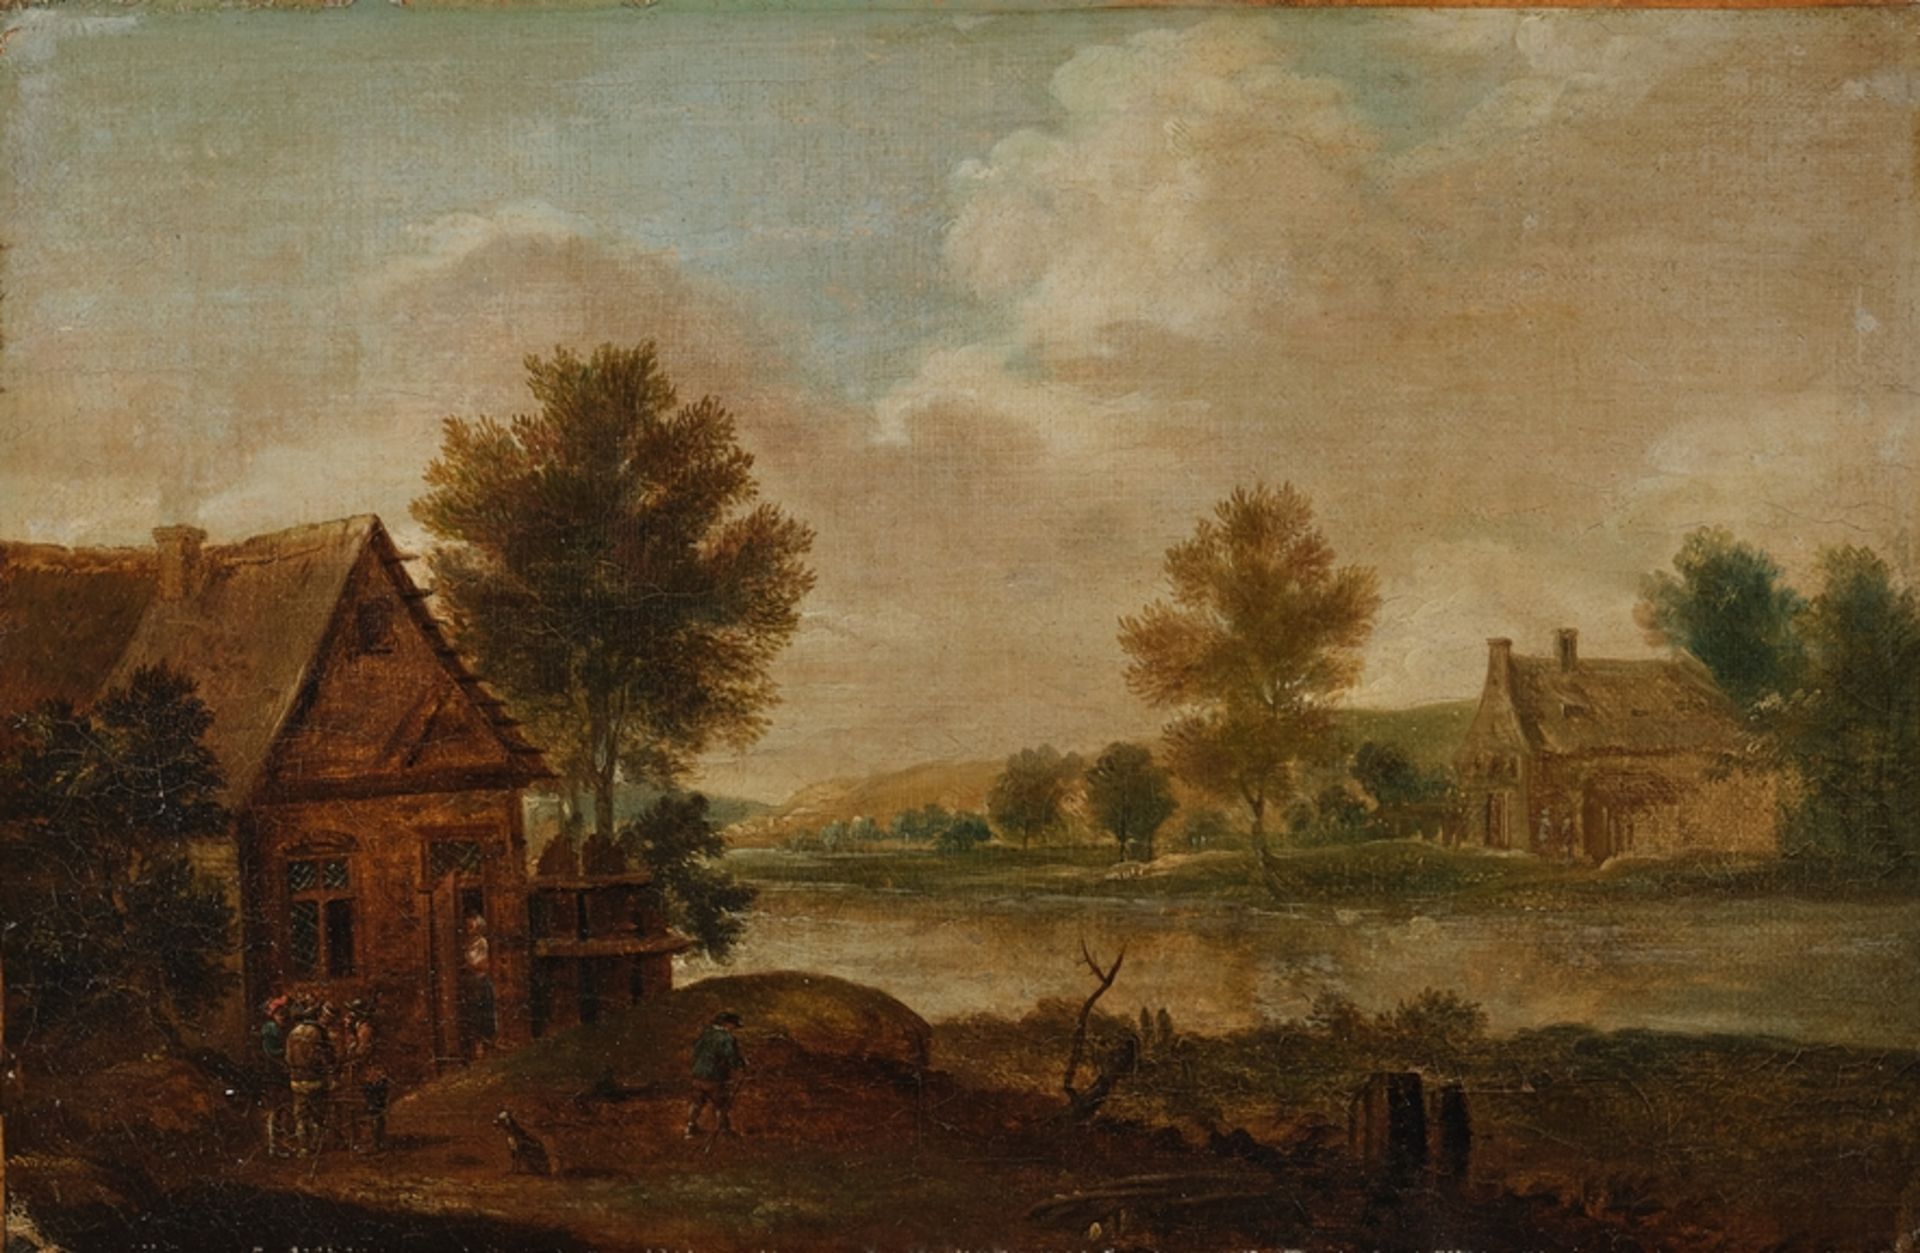 Apshoven, Thomas von (Antwerpen 1622 - 1664 ebda.) wohl,